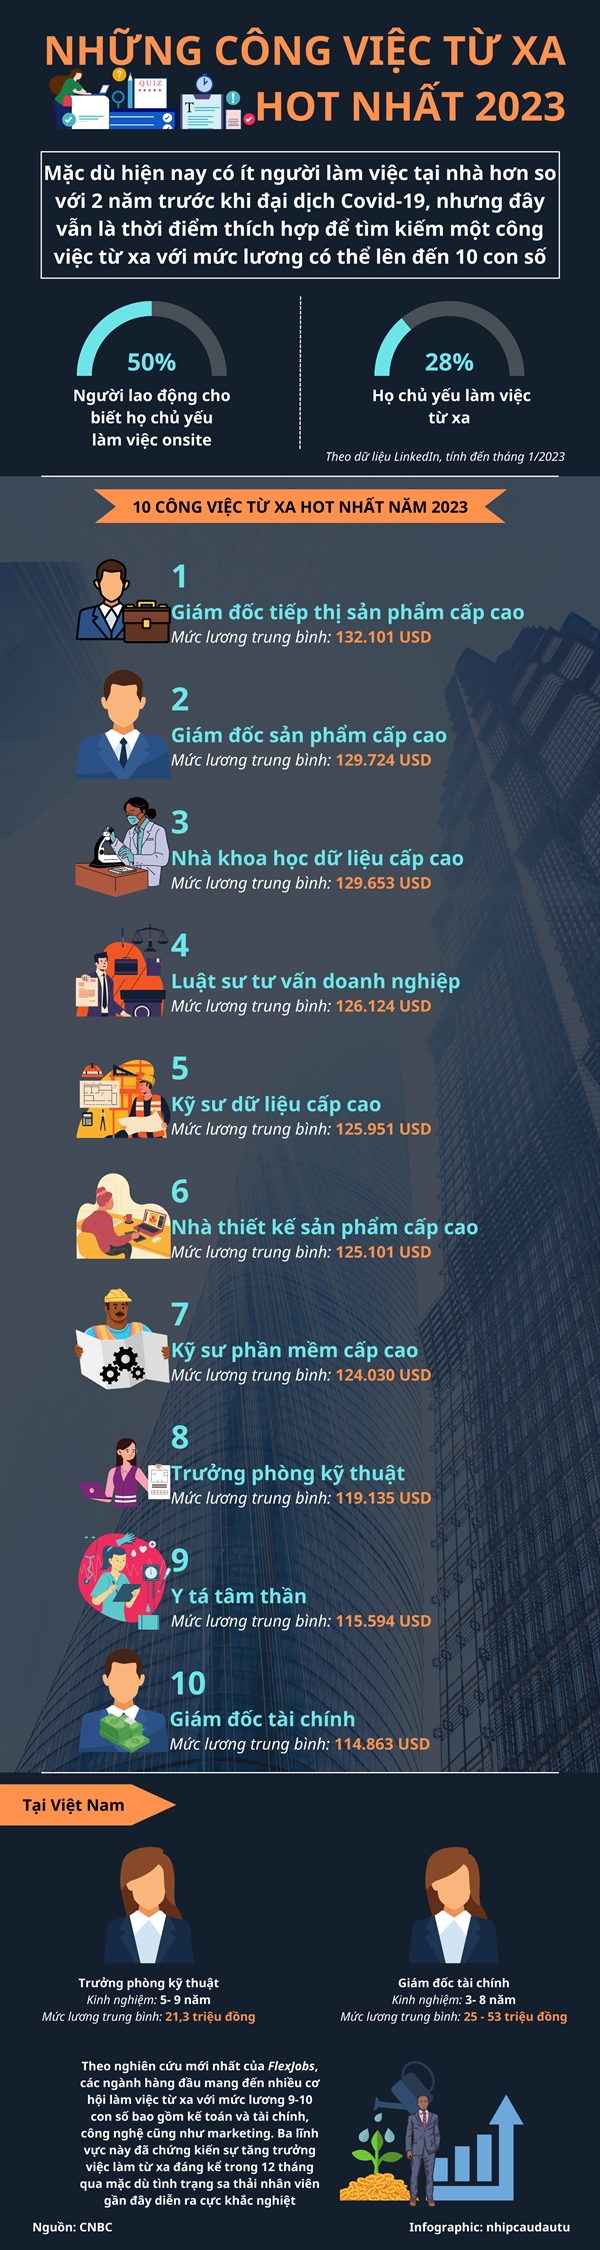 [Infographic] Nhung cong viec tu xa Hot nhat nam 2023